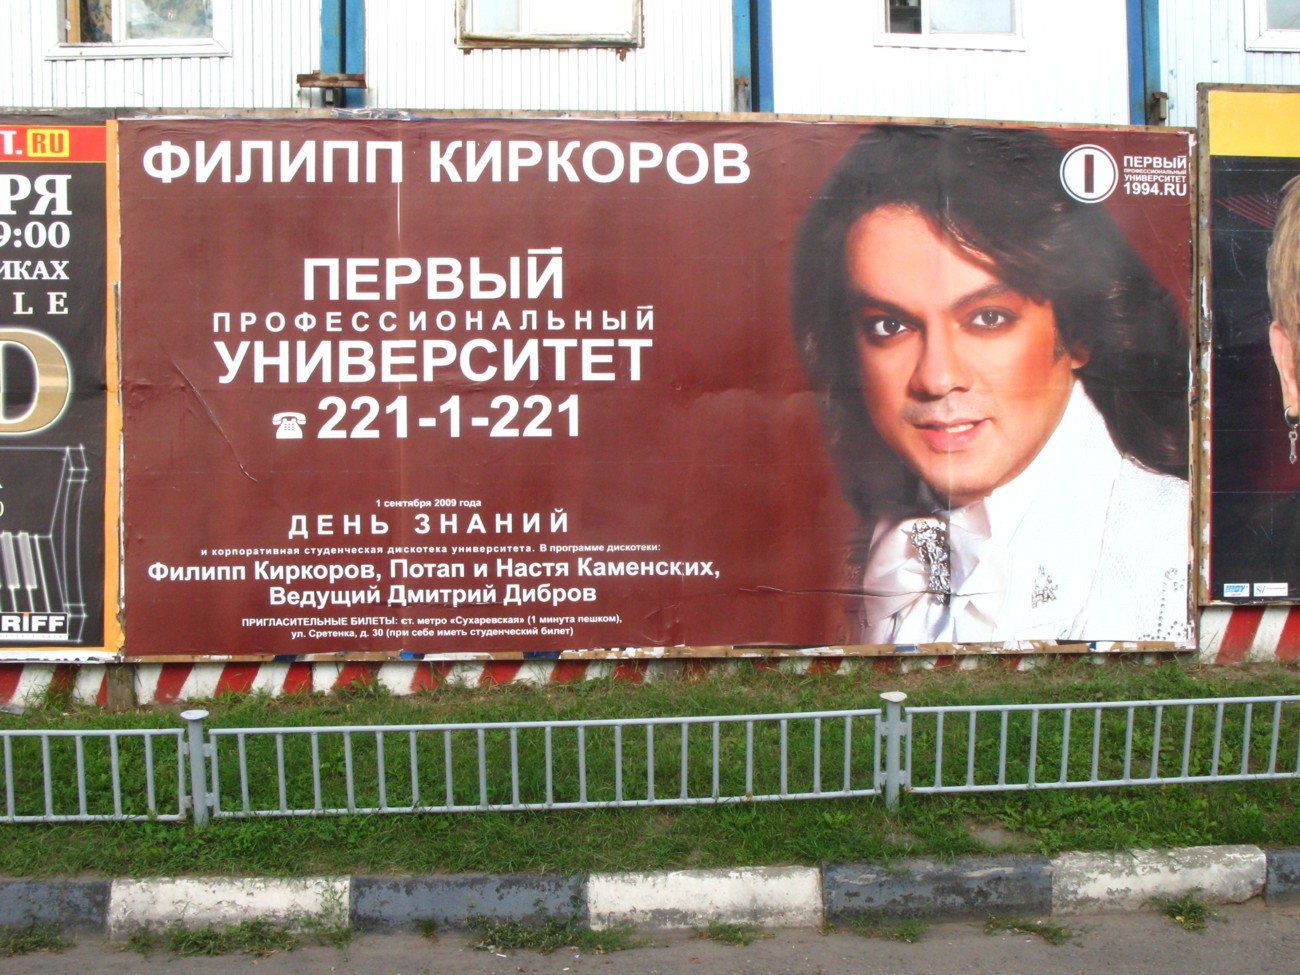 http://www.sostav.ru/articles/rus/2009/13.08/news/images/1kirkorov.jpg